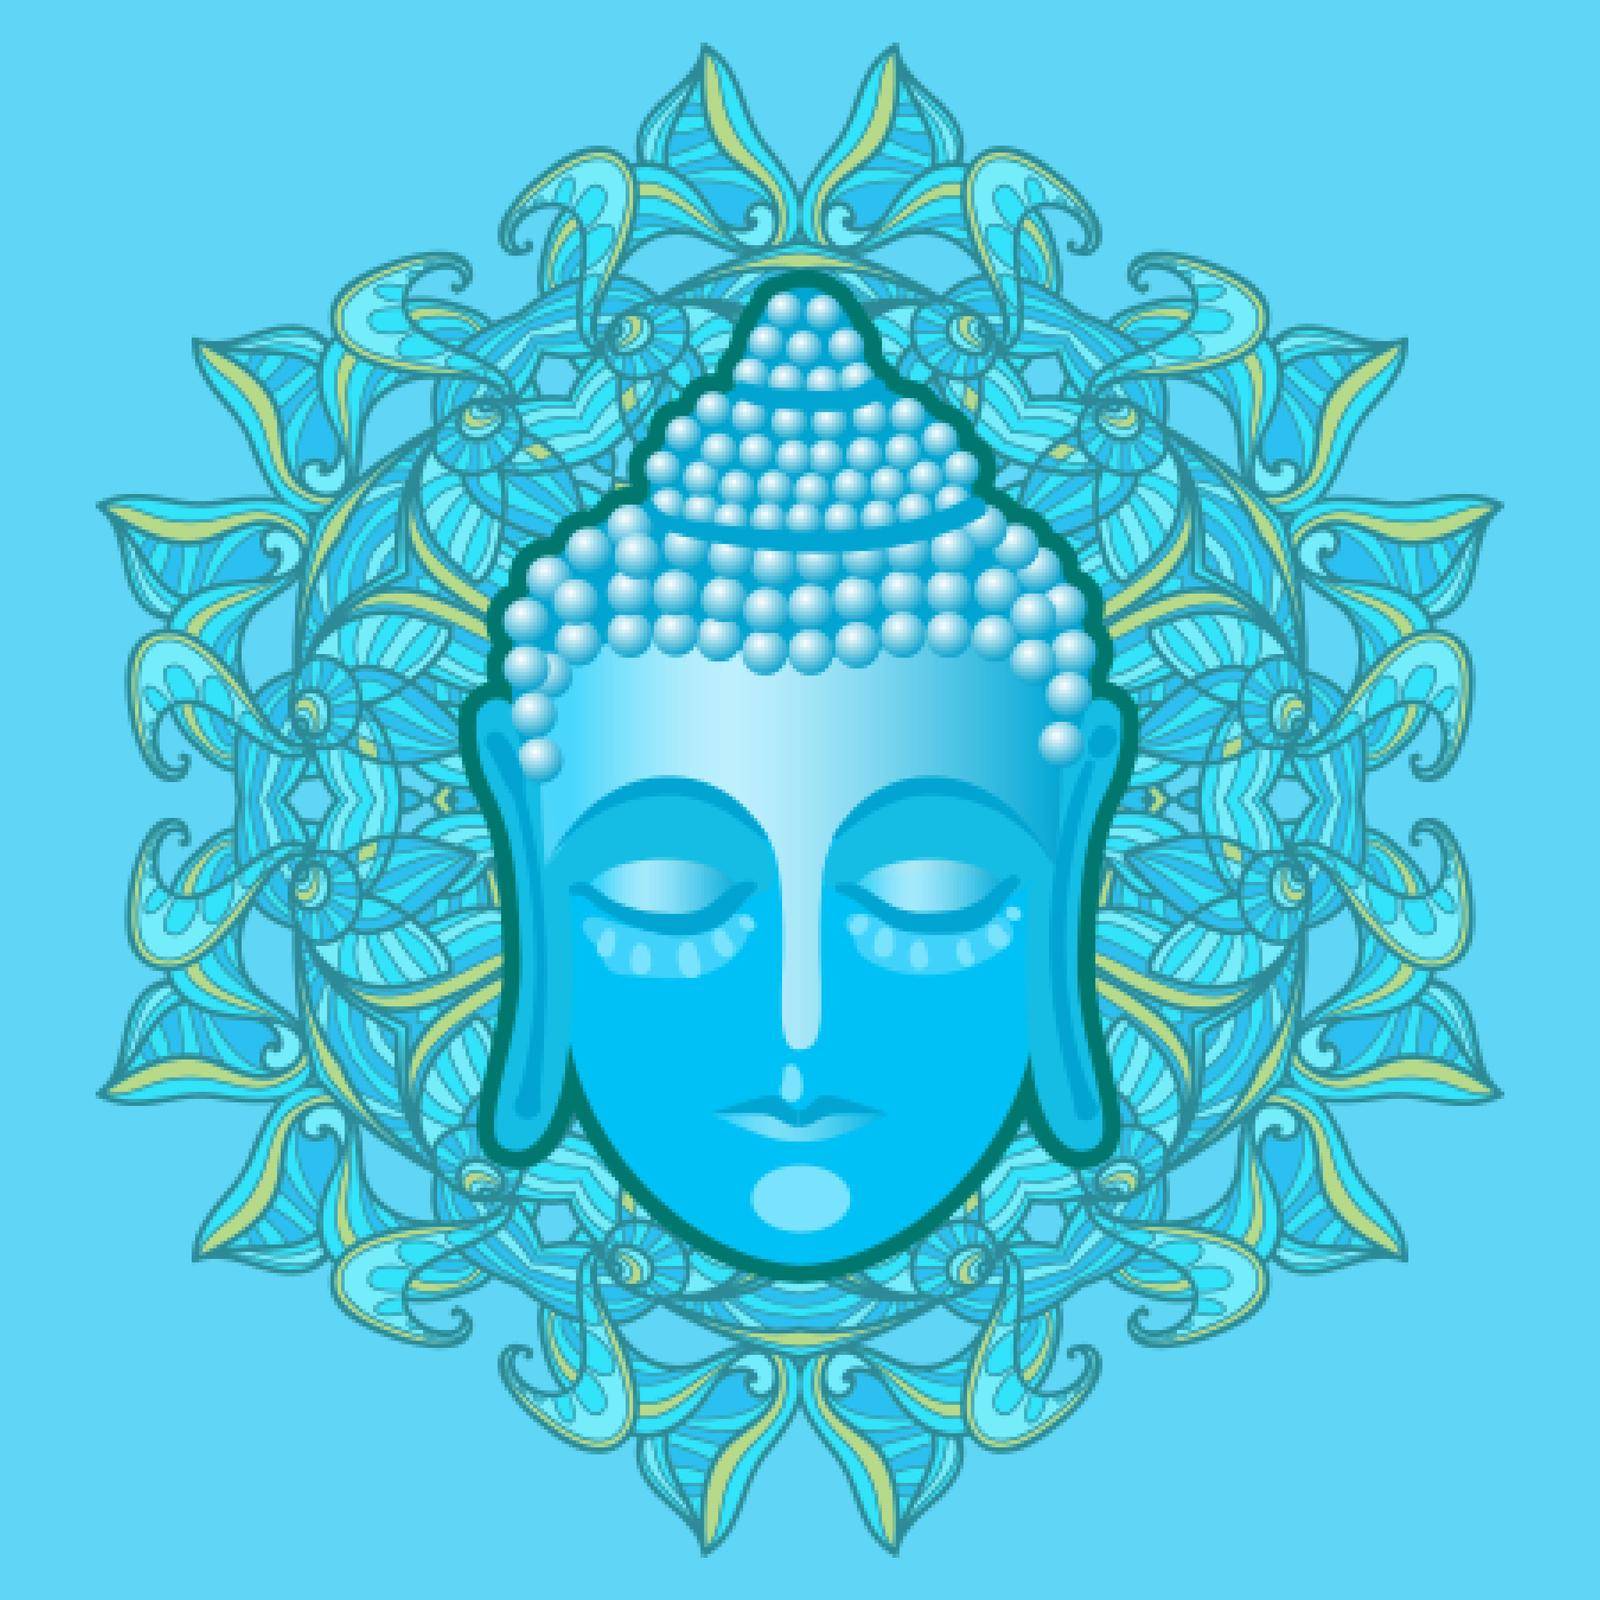 Head of buddha in blue mandala. Vector illustration with symbol of buddhism.